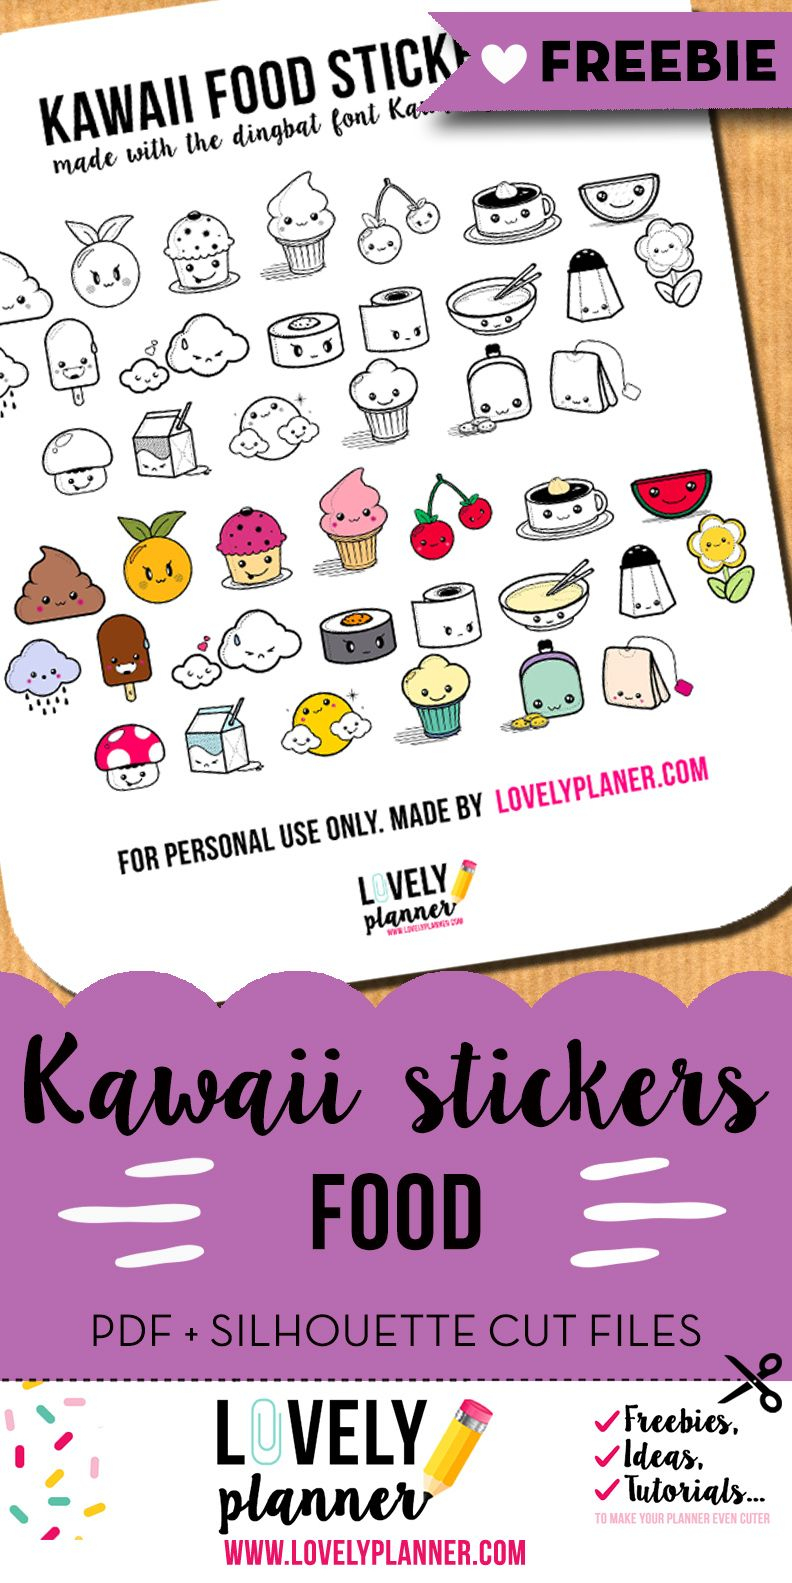 Free Printable Kawaii Food Planner Stickers From Lovelyplanner - Free Printable Kawaii Stickers